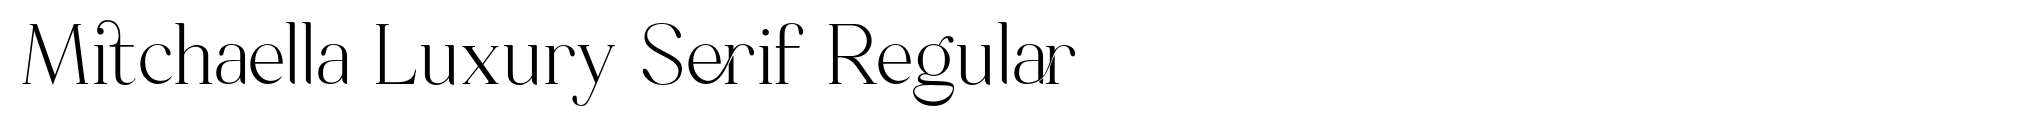 Mitchaella Luxury Serif Regular image